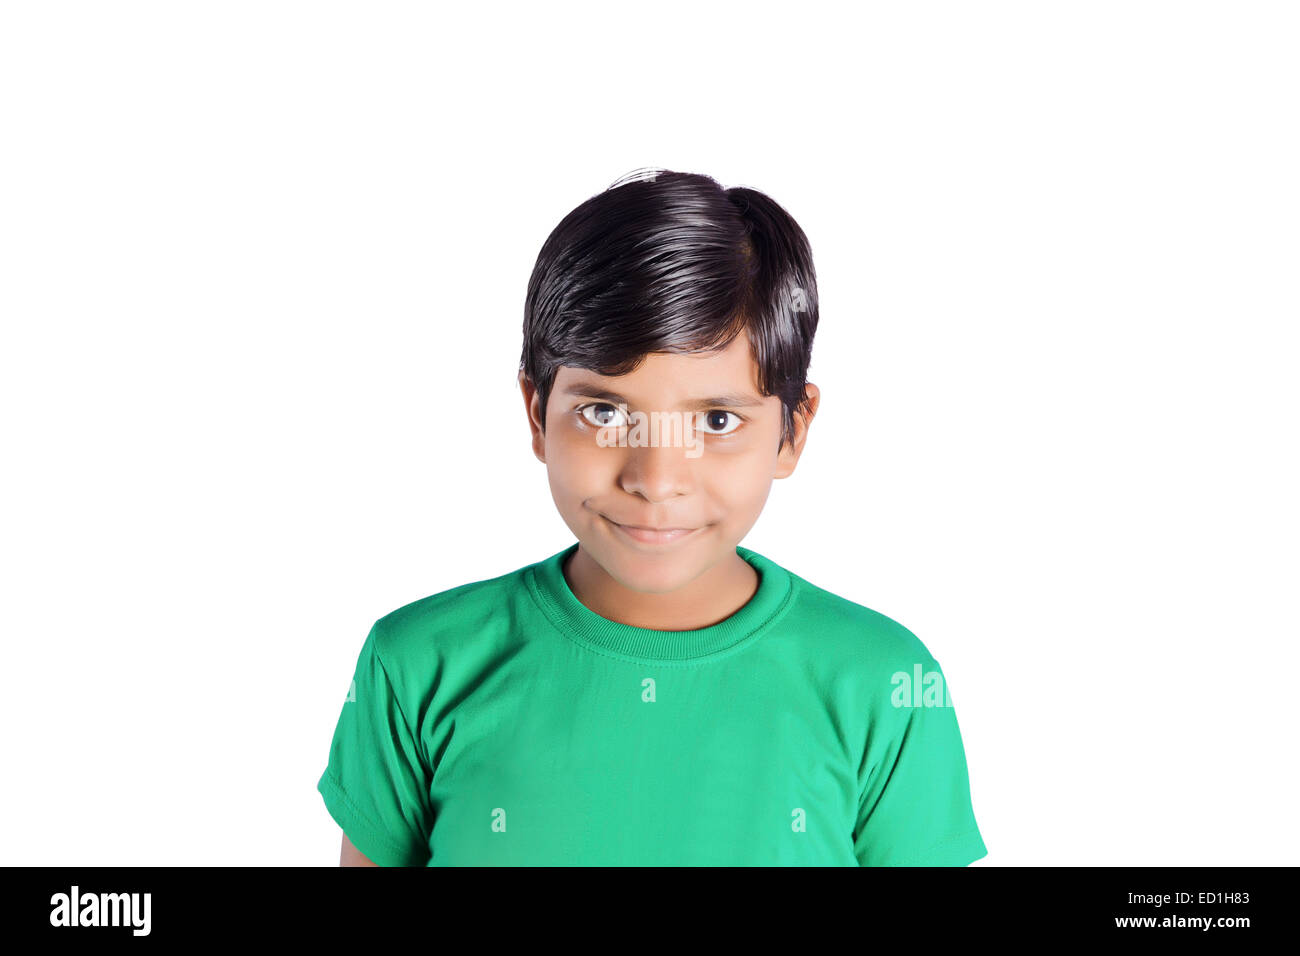 1 indian child boy pose Stock Photo